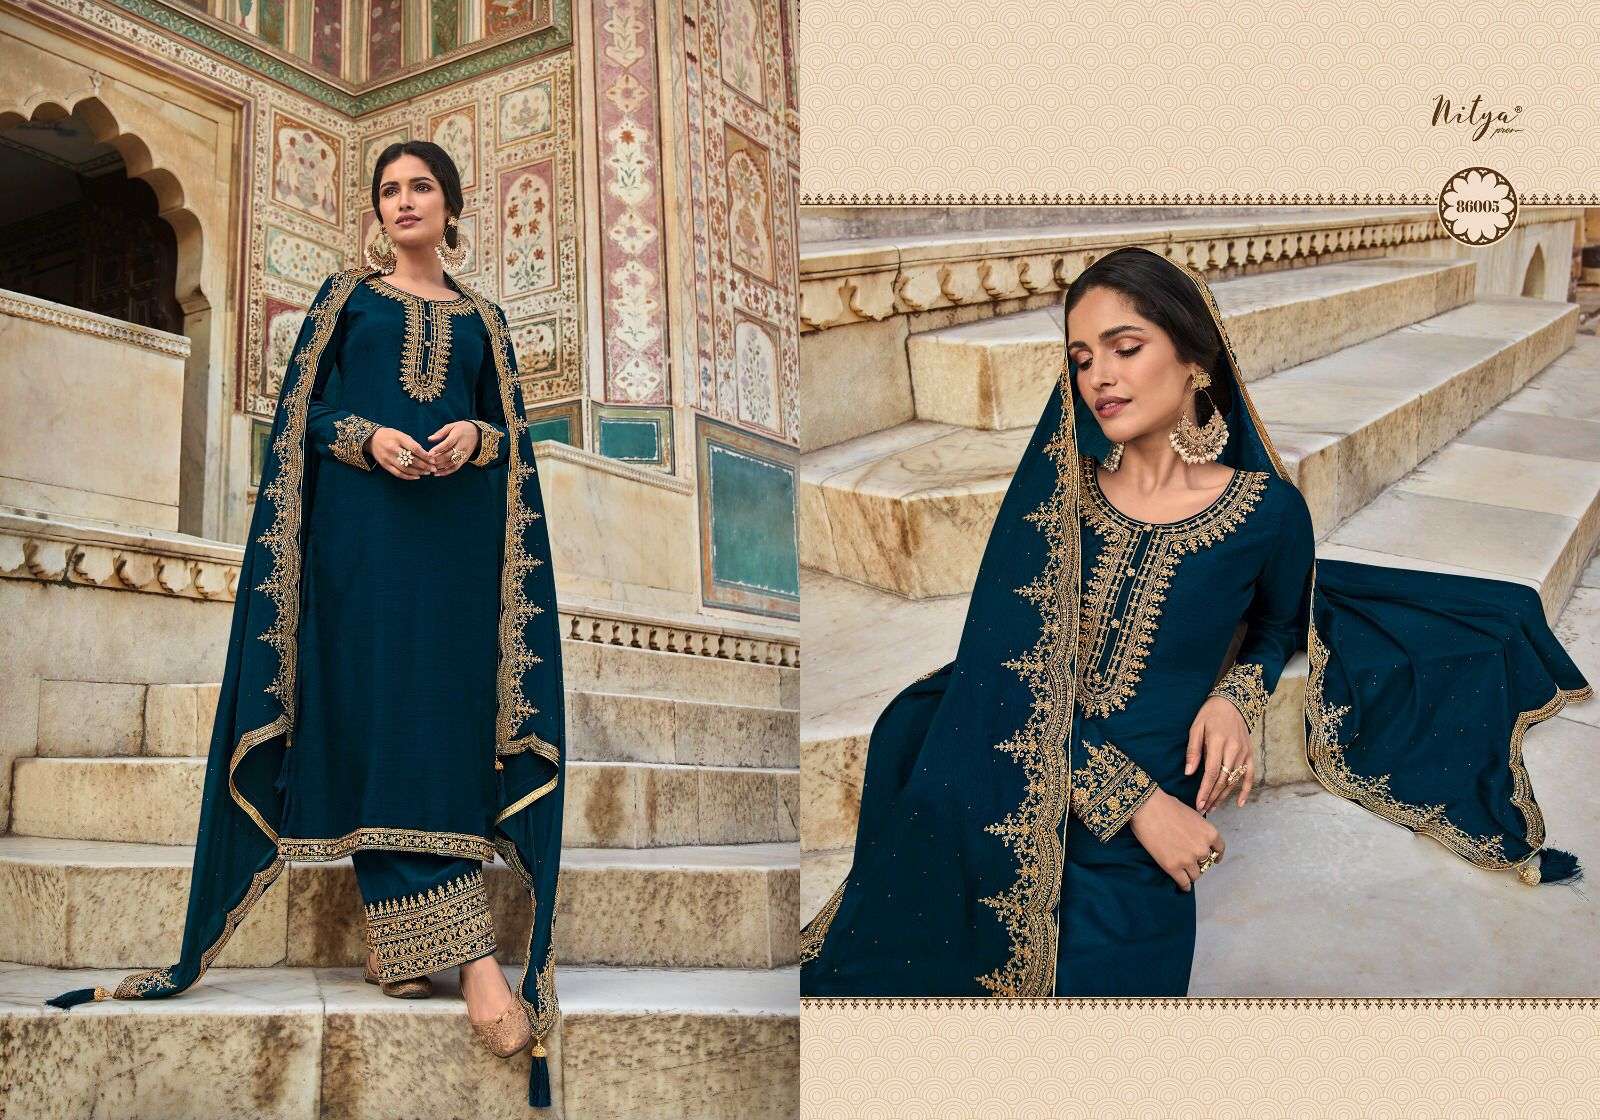 lt fabrics nitya vol-186 86001-86006 series stylish designer salwar suits catalogue design 2023 